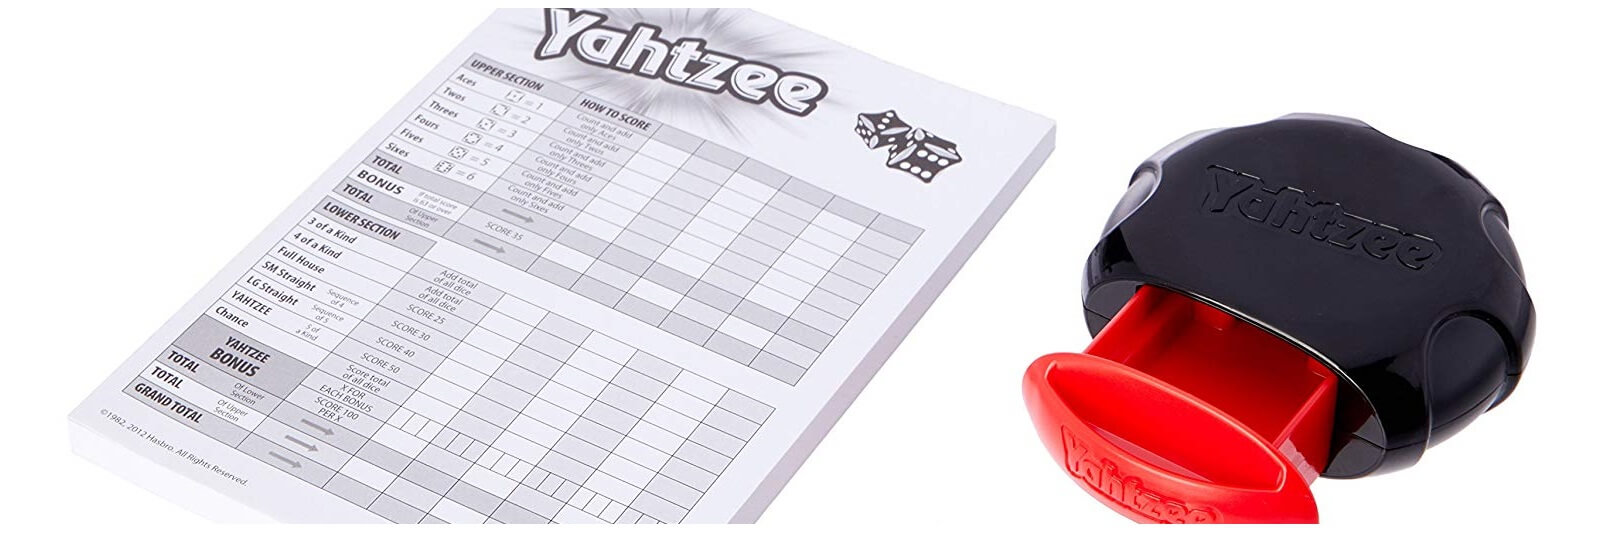 yahtzee board game rules